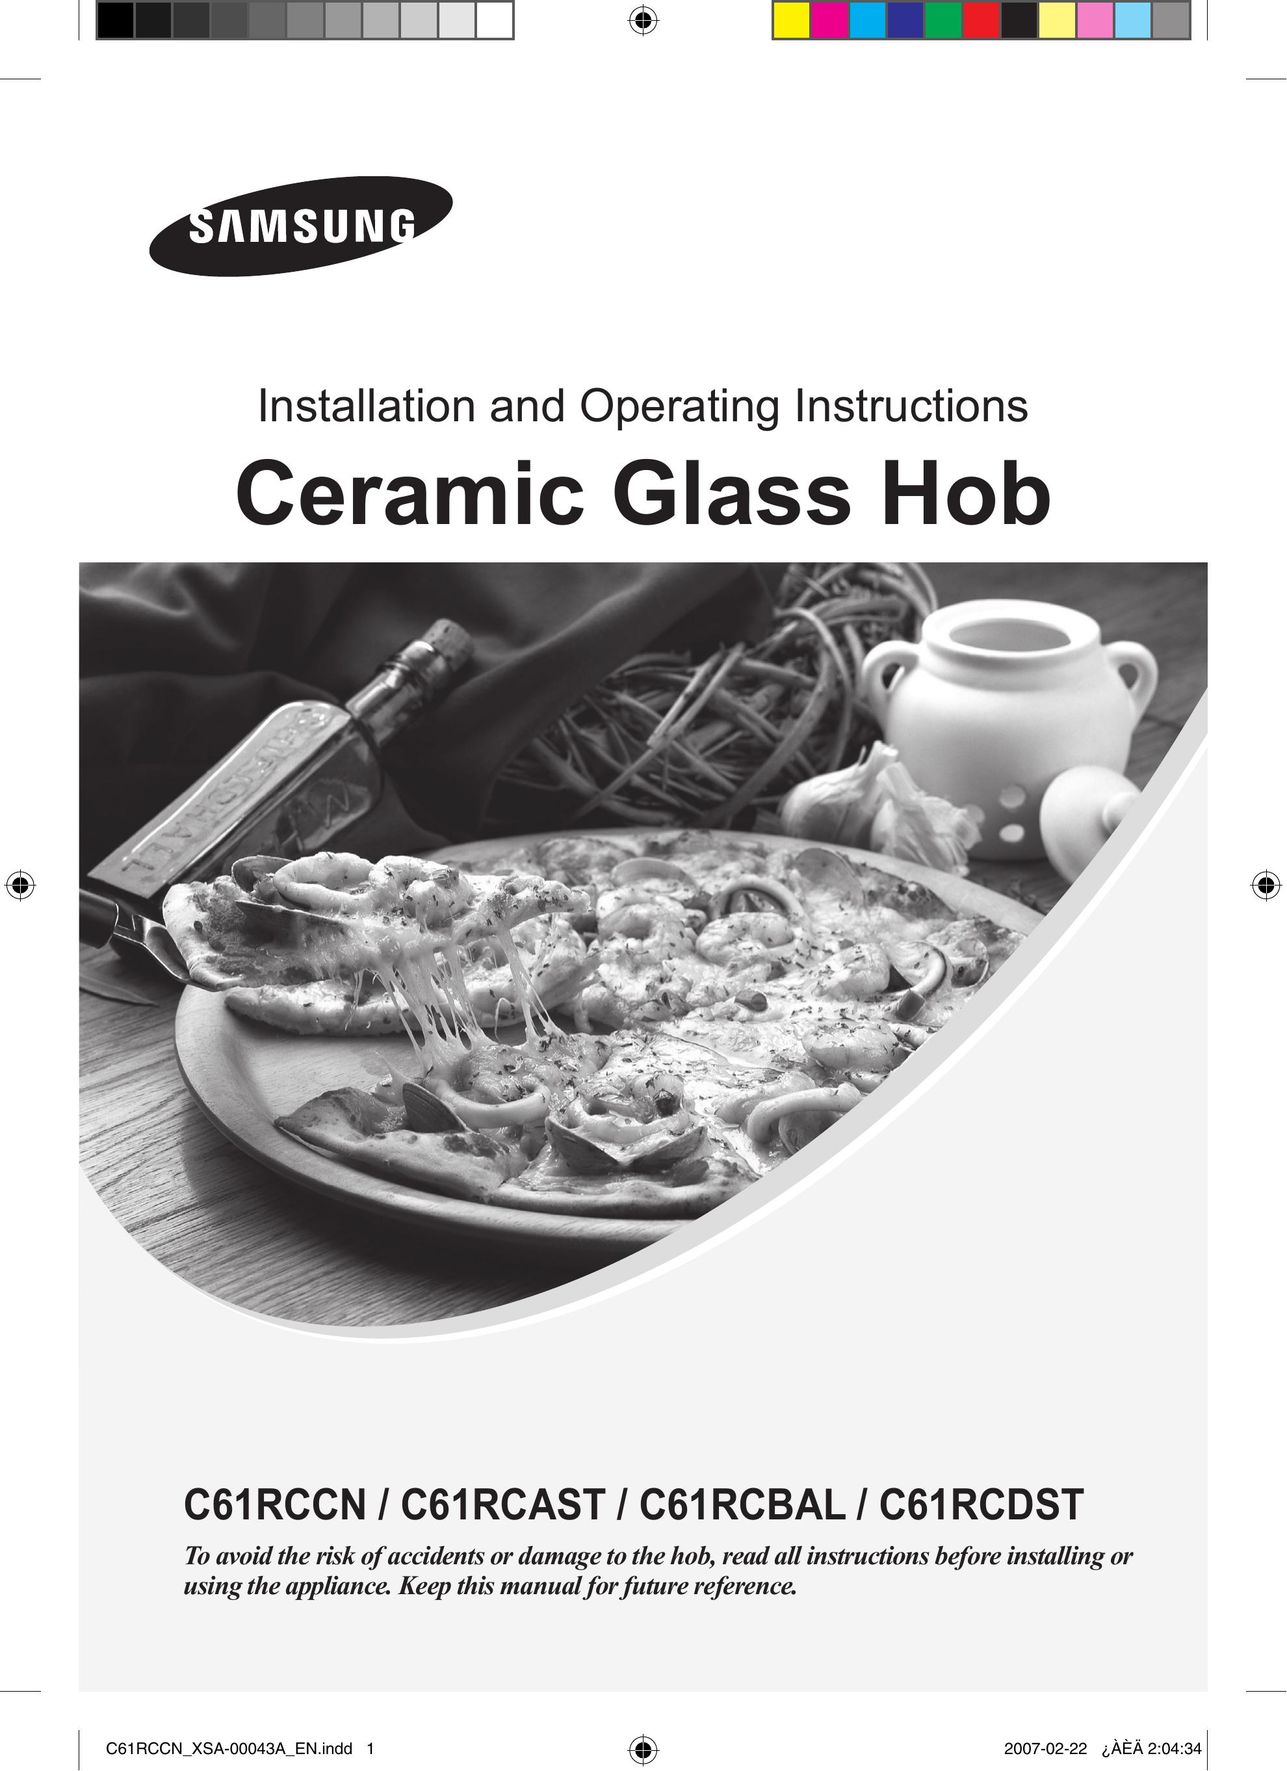 Samsung C61RCAST Cooktop User Manual